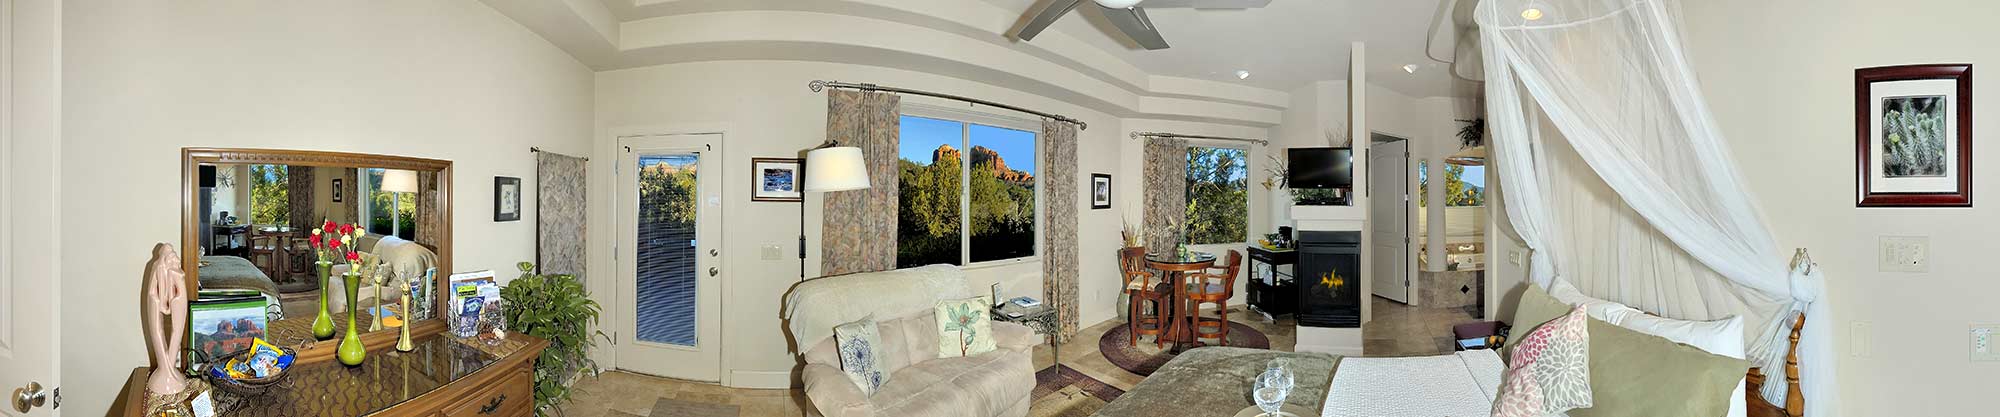 Panorama of Evergreen Room